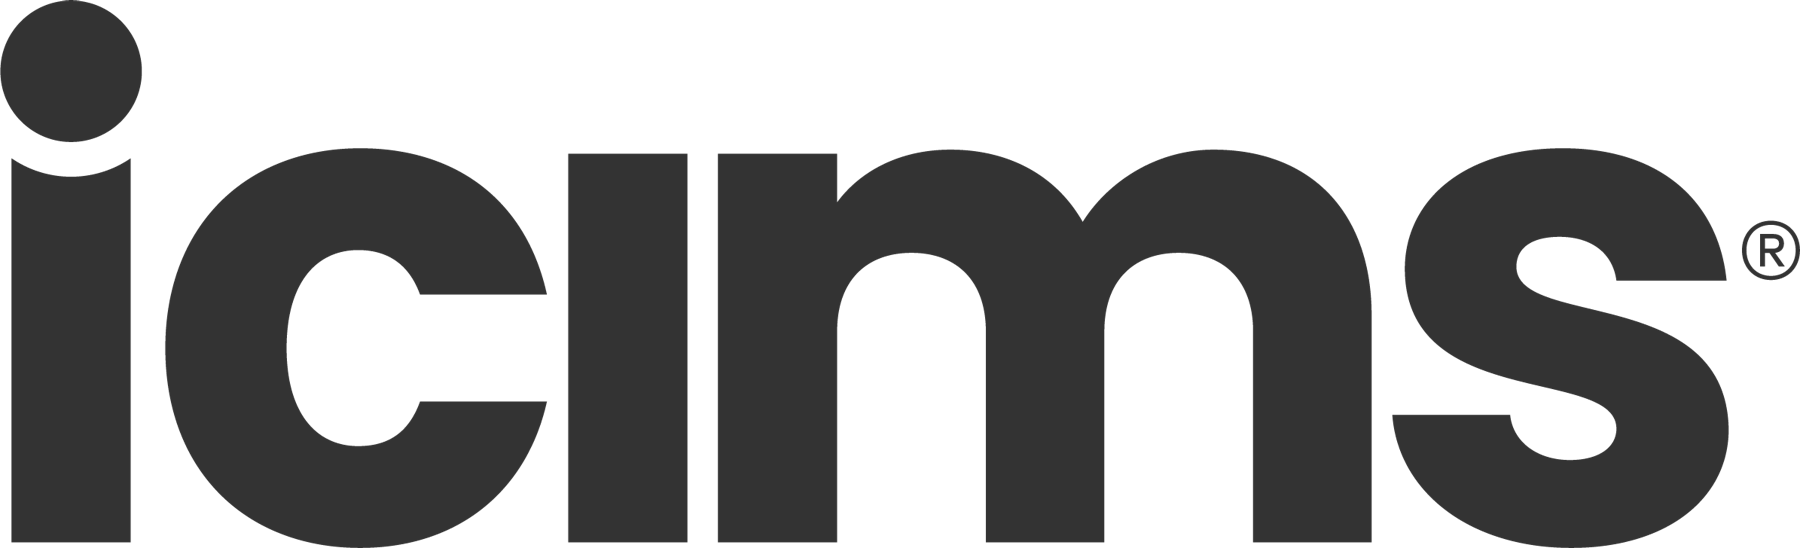 Icims logo white black png